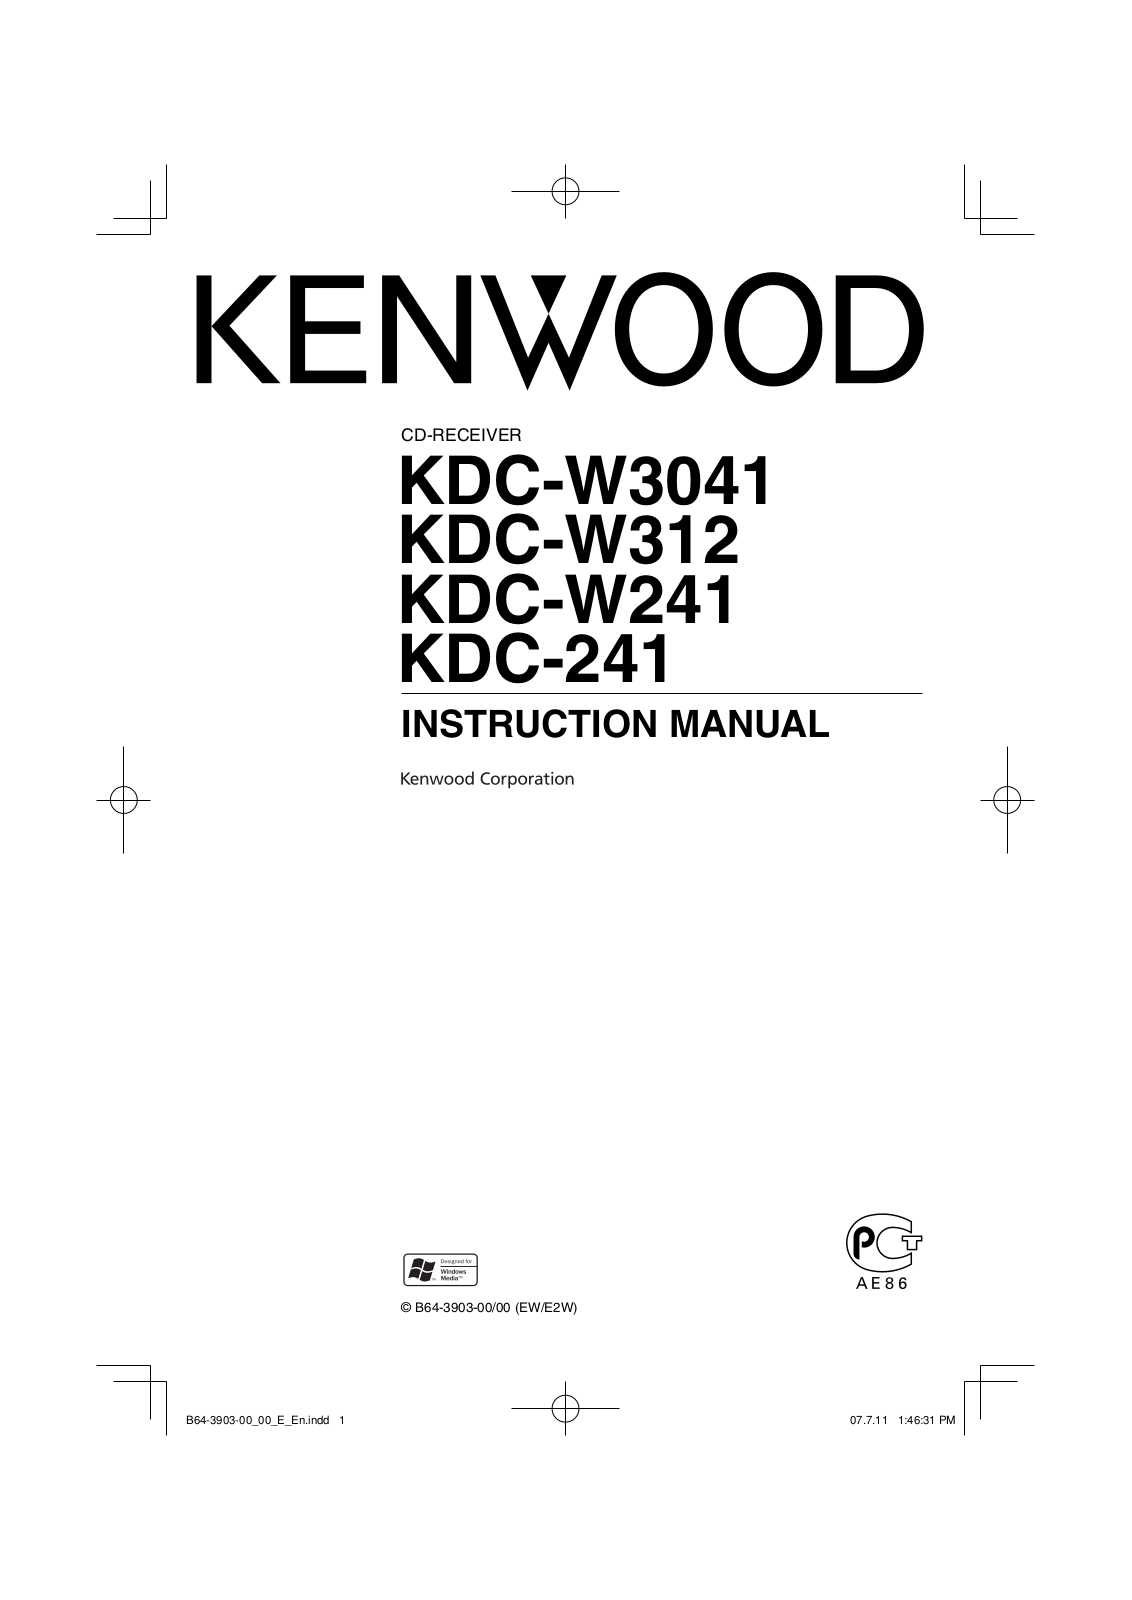 Kenwood KDC-W3041 Manual